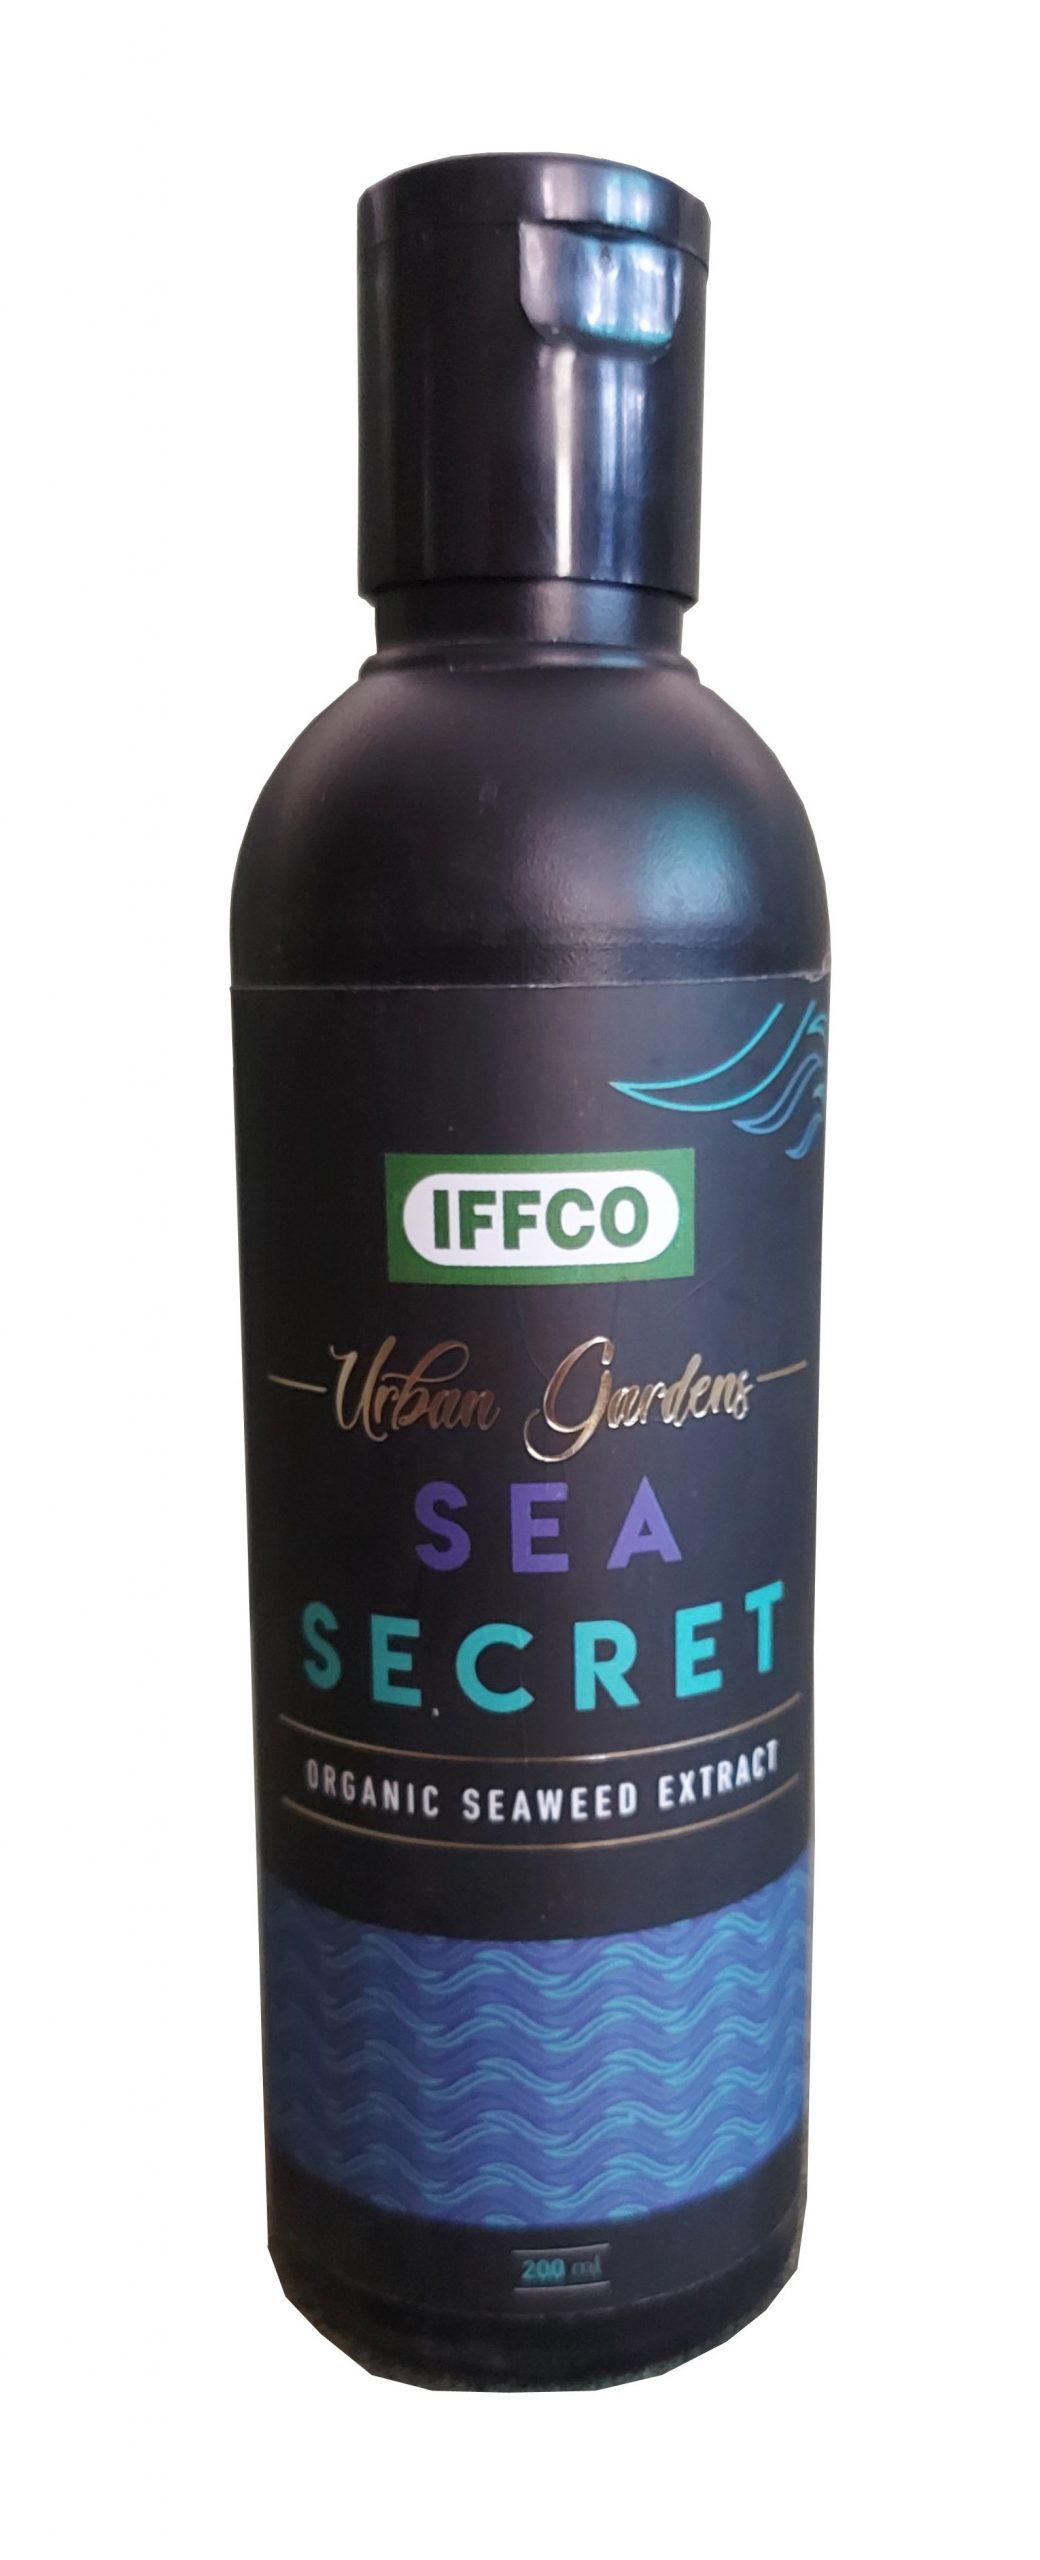 Sea Secret Organic Seaweed Extract 200ml